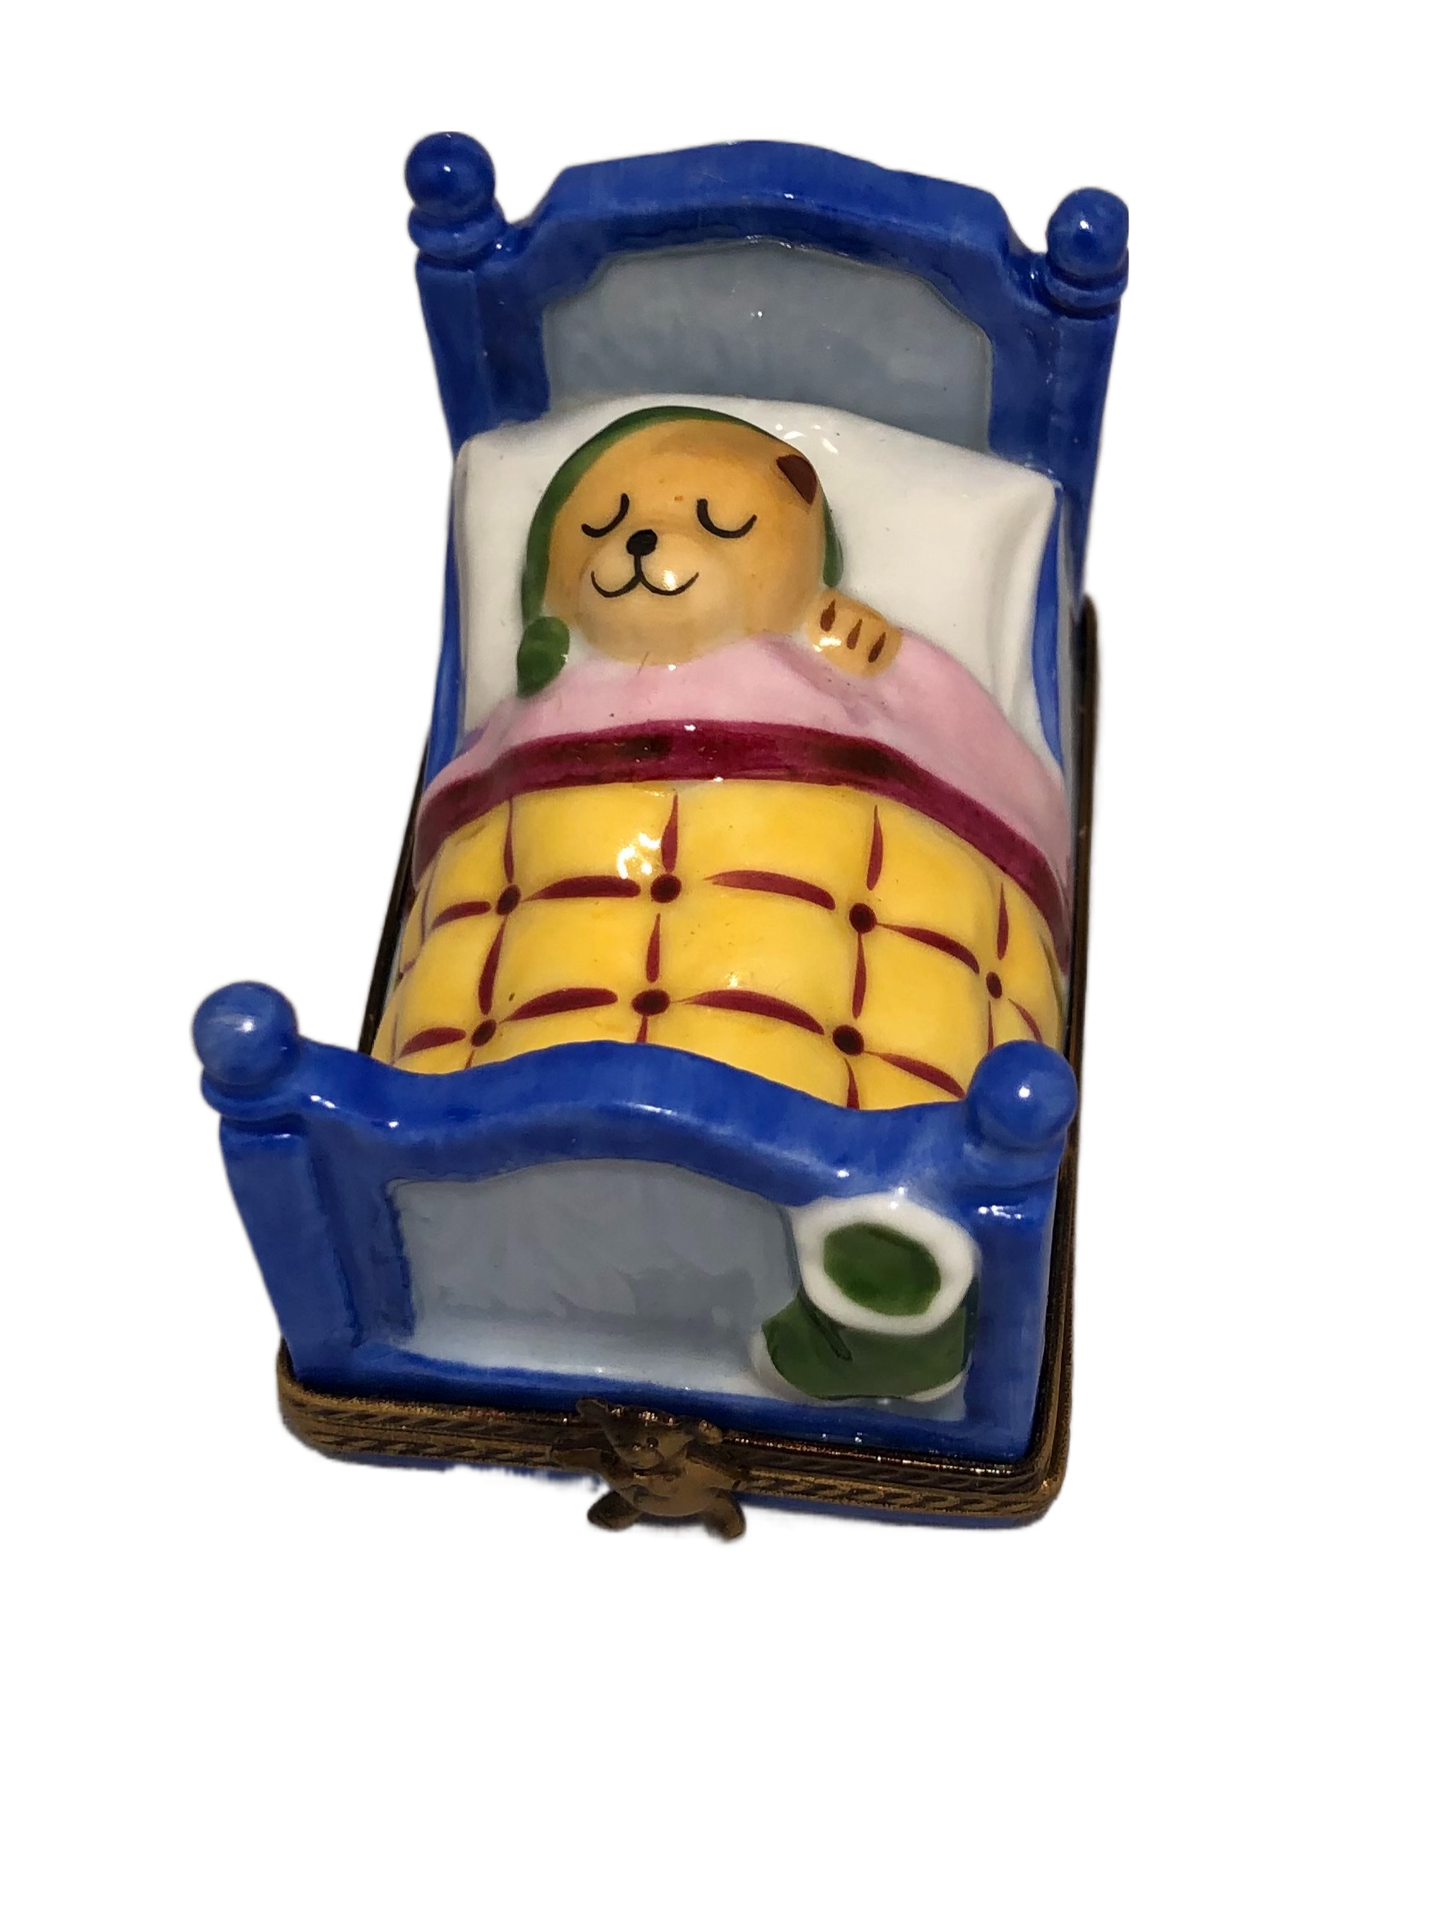 Sleepy Bear in Blue Bed: Hand-Painted Limoges Box